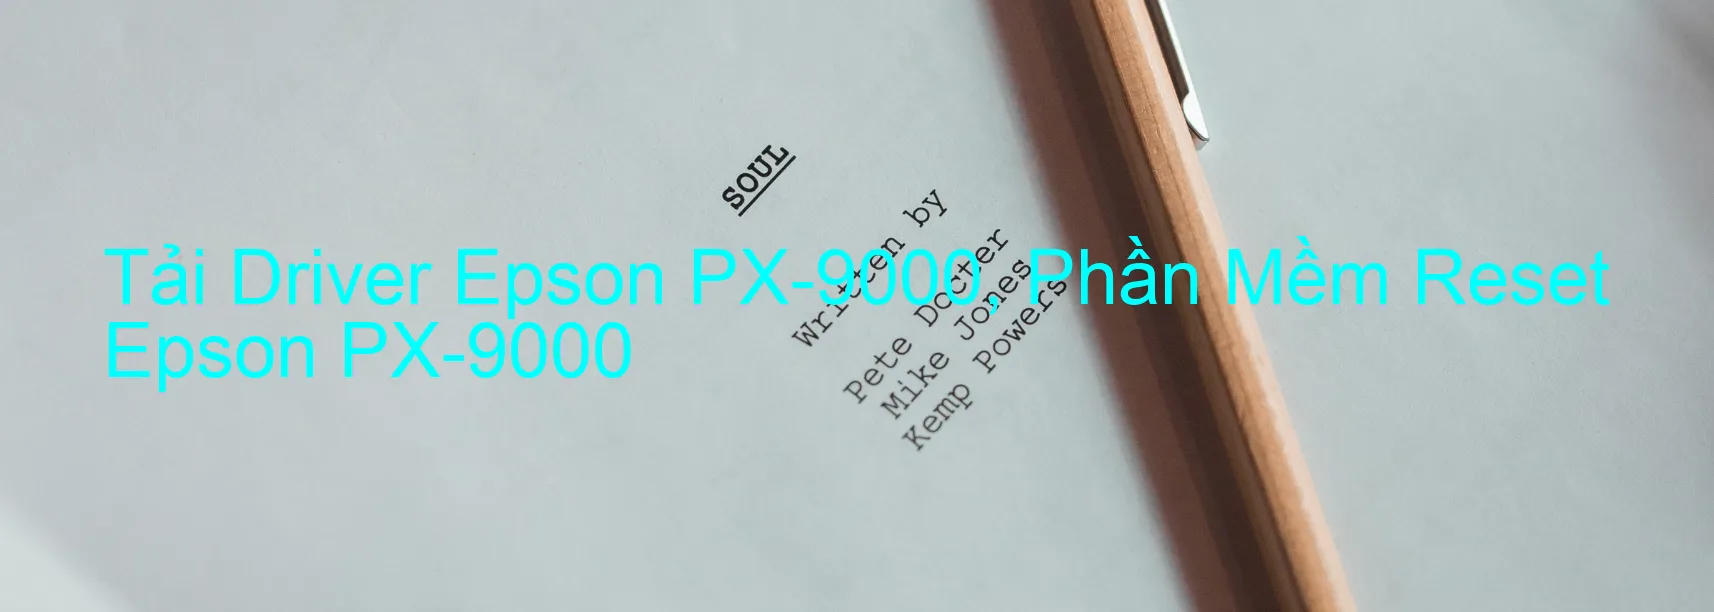 Driver Epson PX-9000, Phần Mềm Reset Epson PX-9000